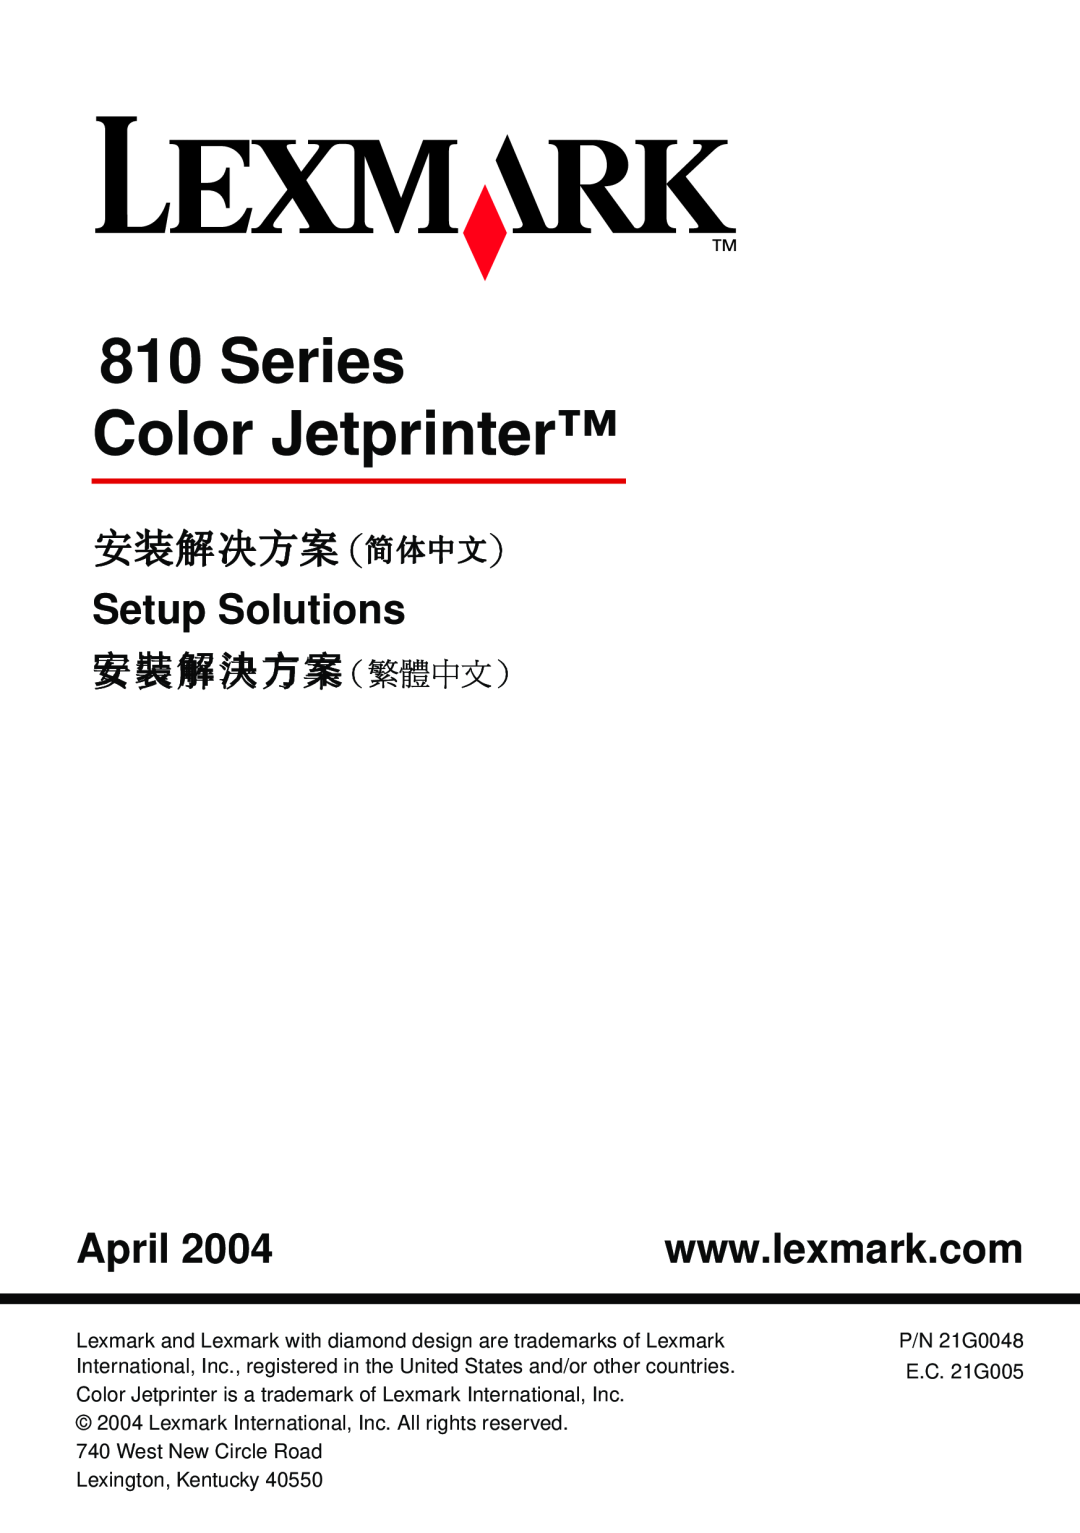 Lexmark 810 Series manual Series Color Jetprinter, （莤莤莤） Setup Solutions, April, 安裝解決方案（繁體中文） 